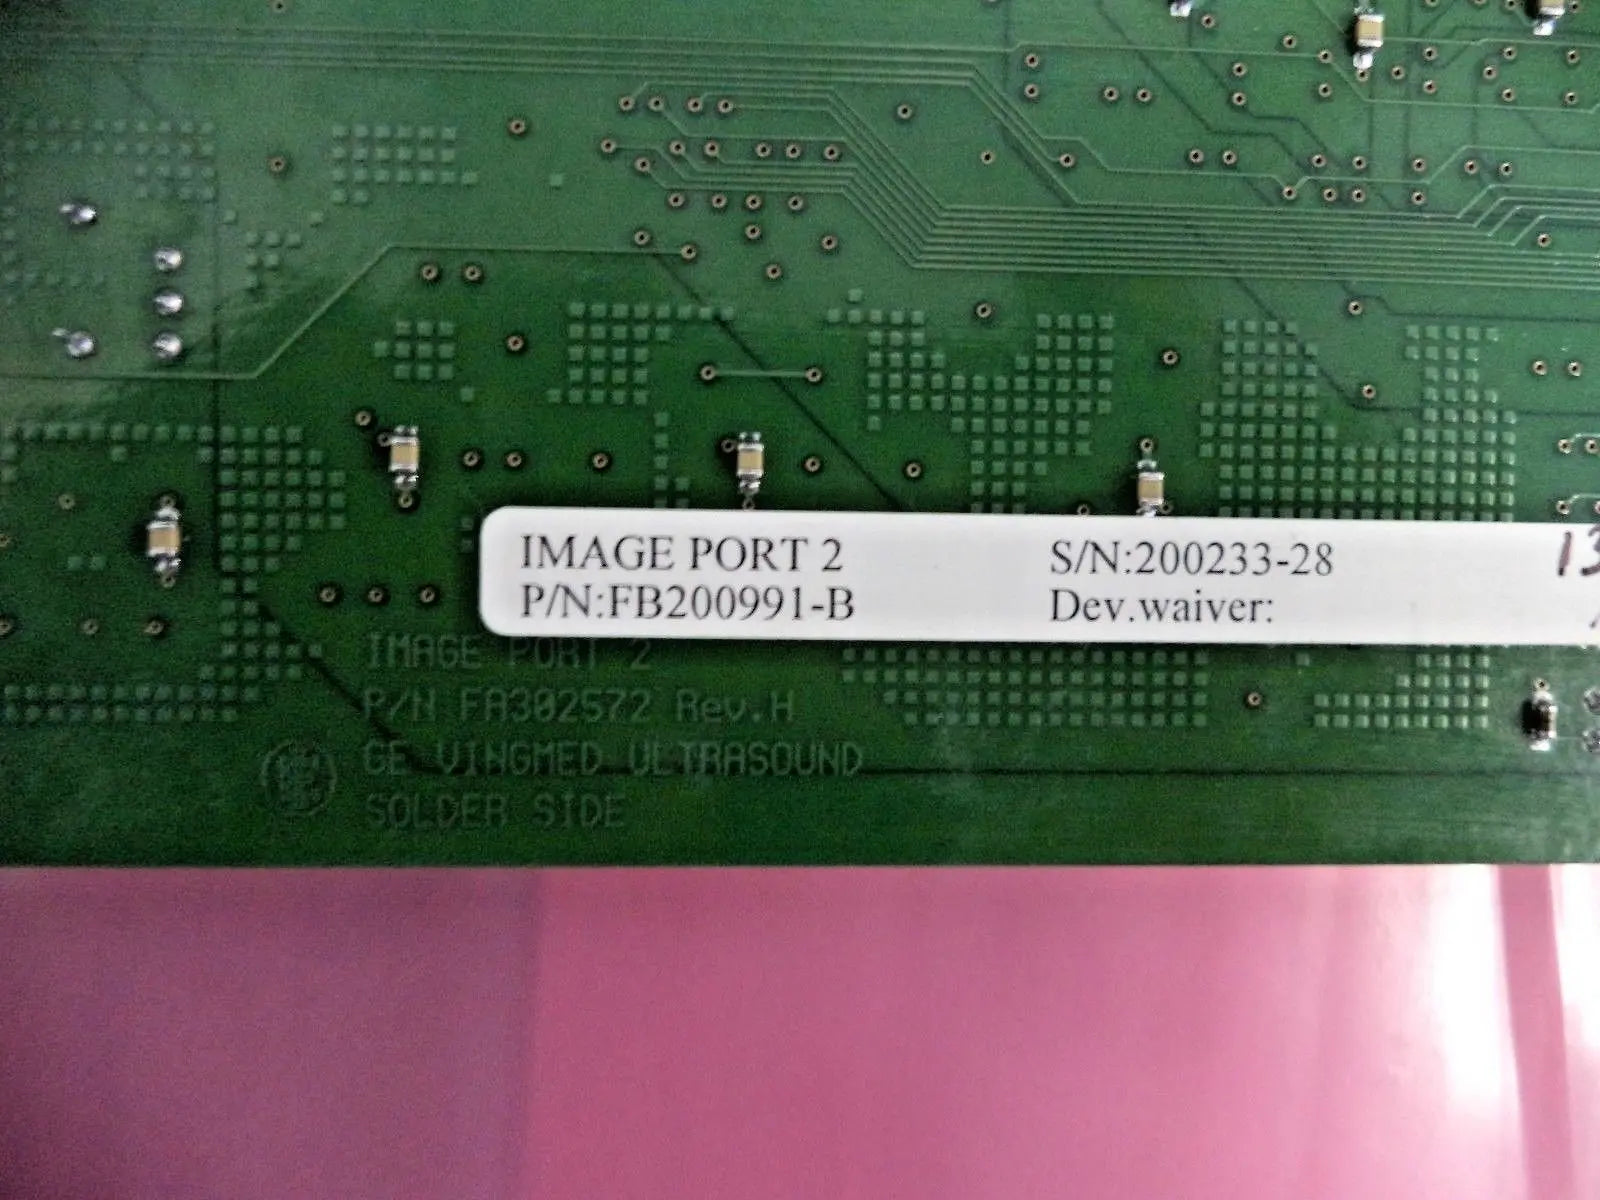 GE Vivid 7 Ultrasound Image Port 2 Board (PN: FB200991-B)